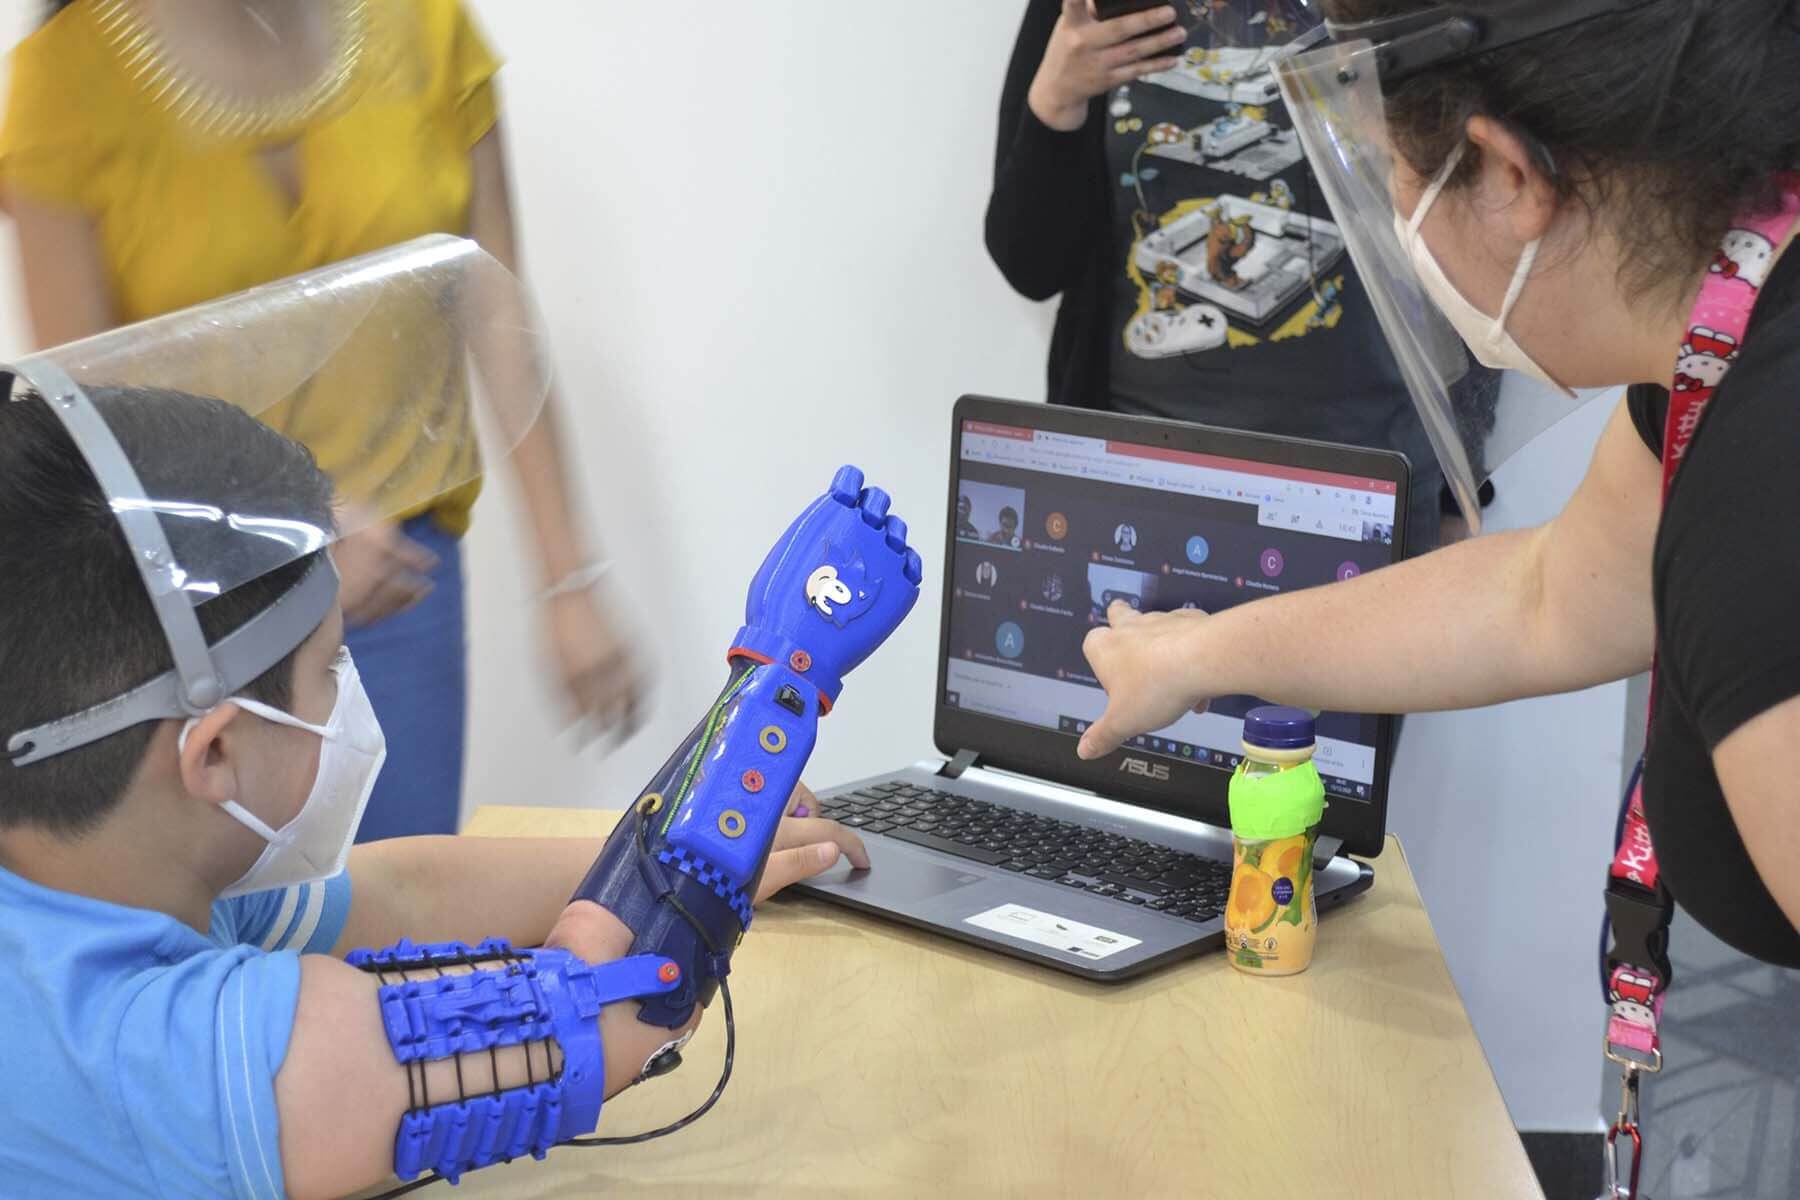 The Peruvian startup designing advanced bionic arm prosthetics